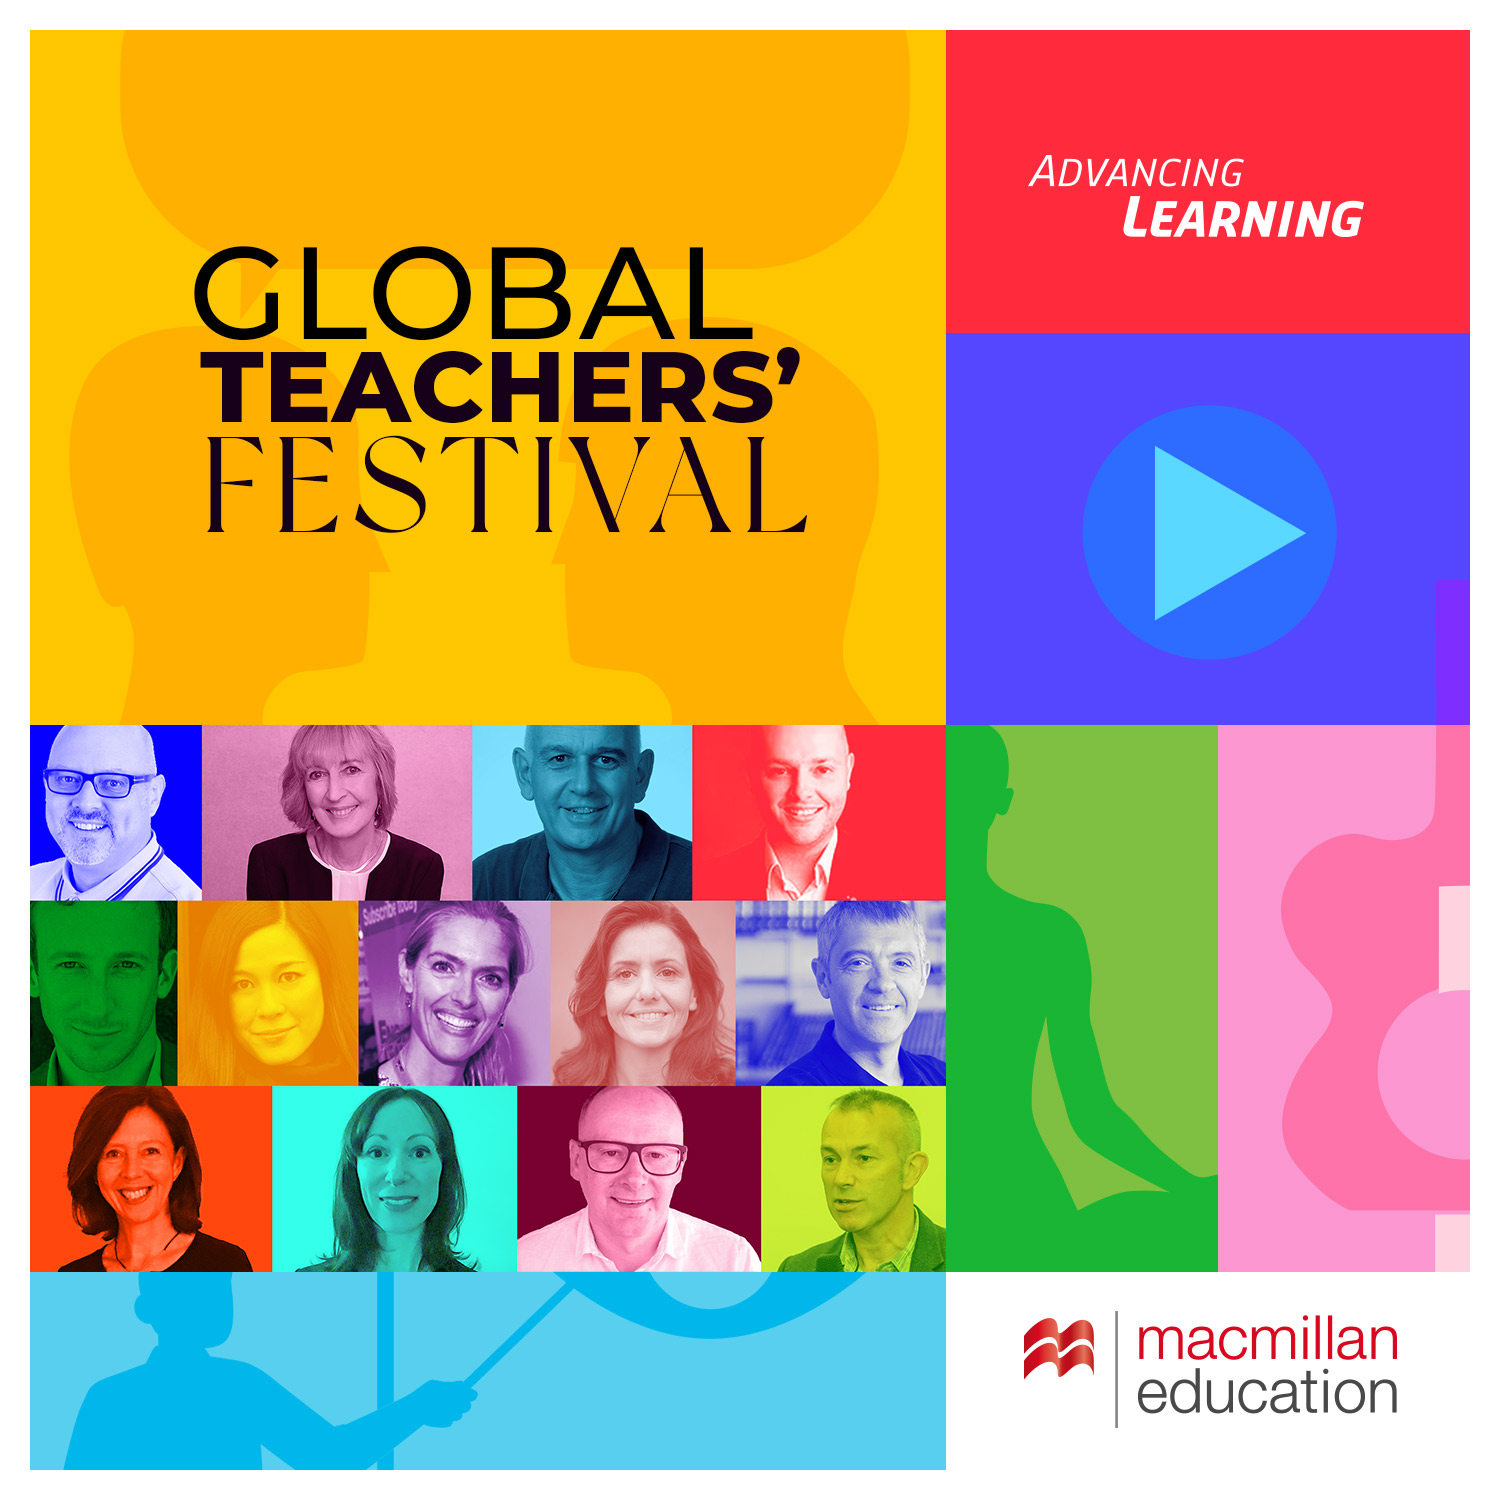 Global Teachers' Festival Day 6: 15th February 2021